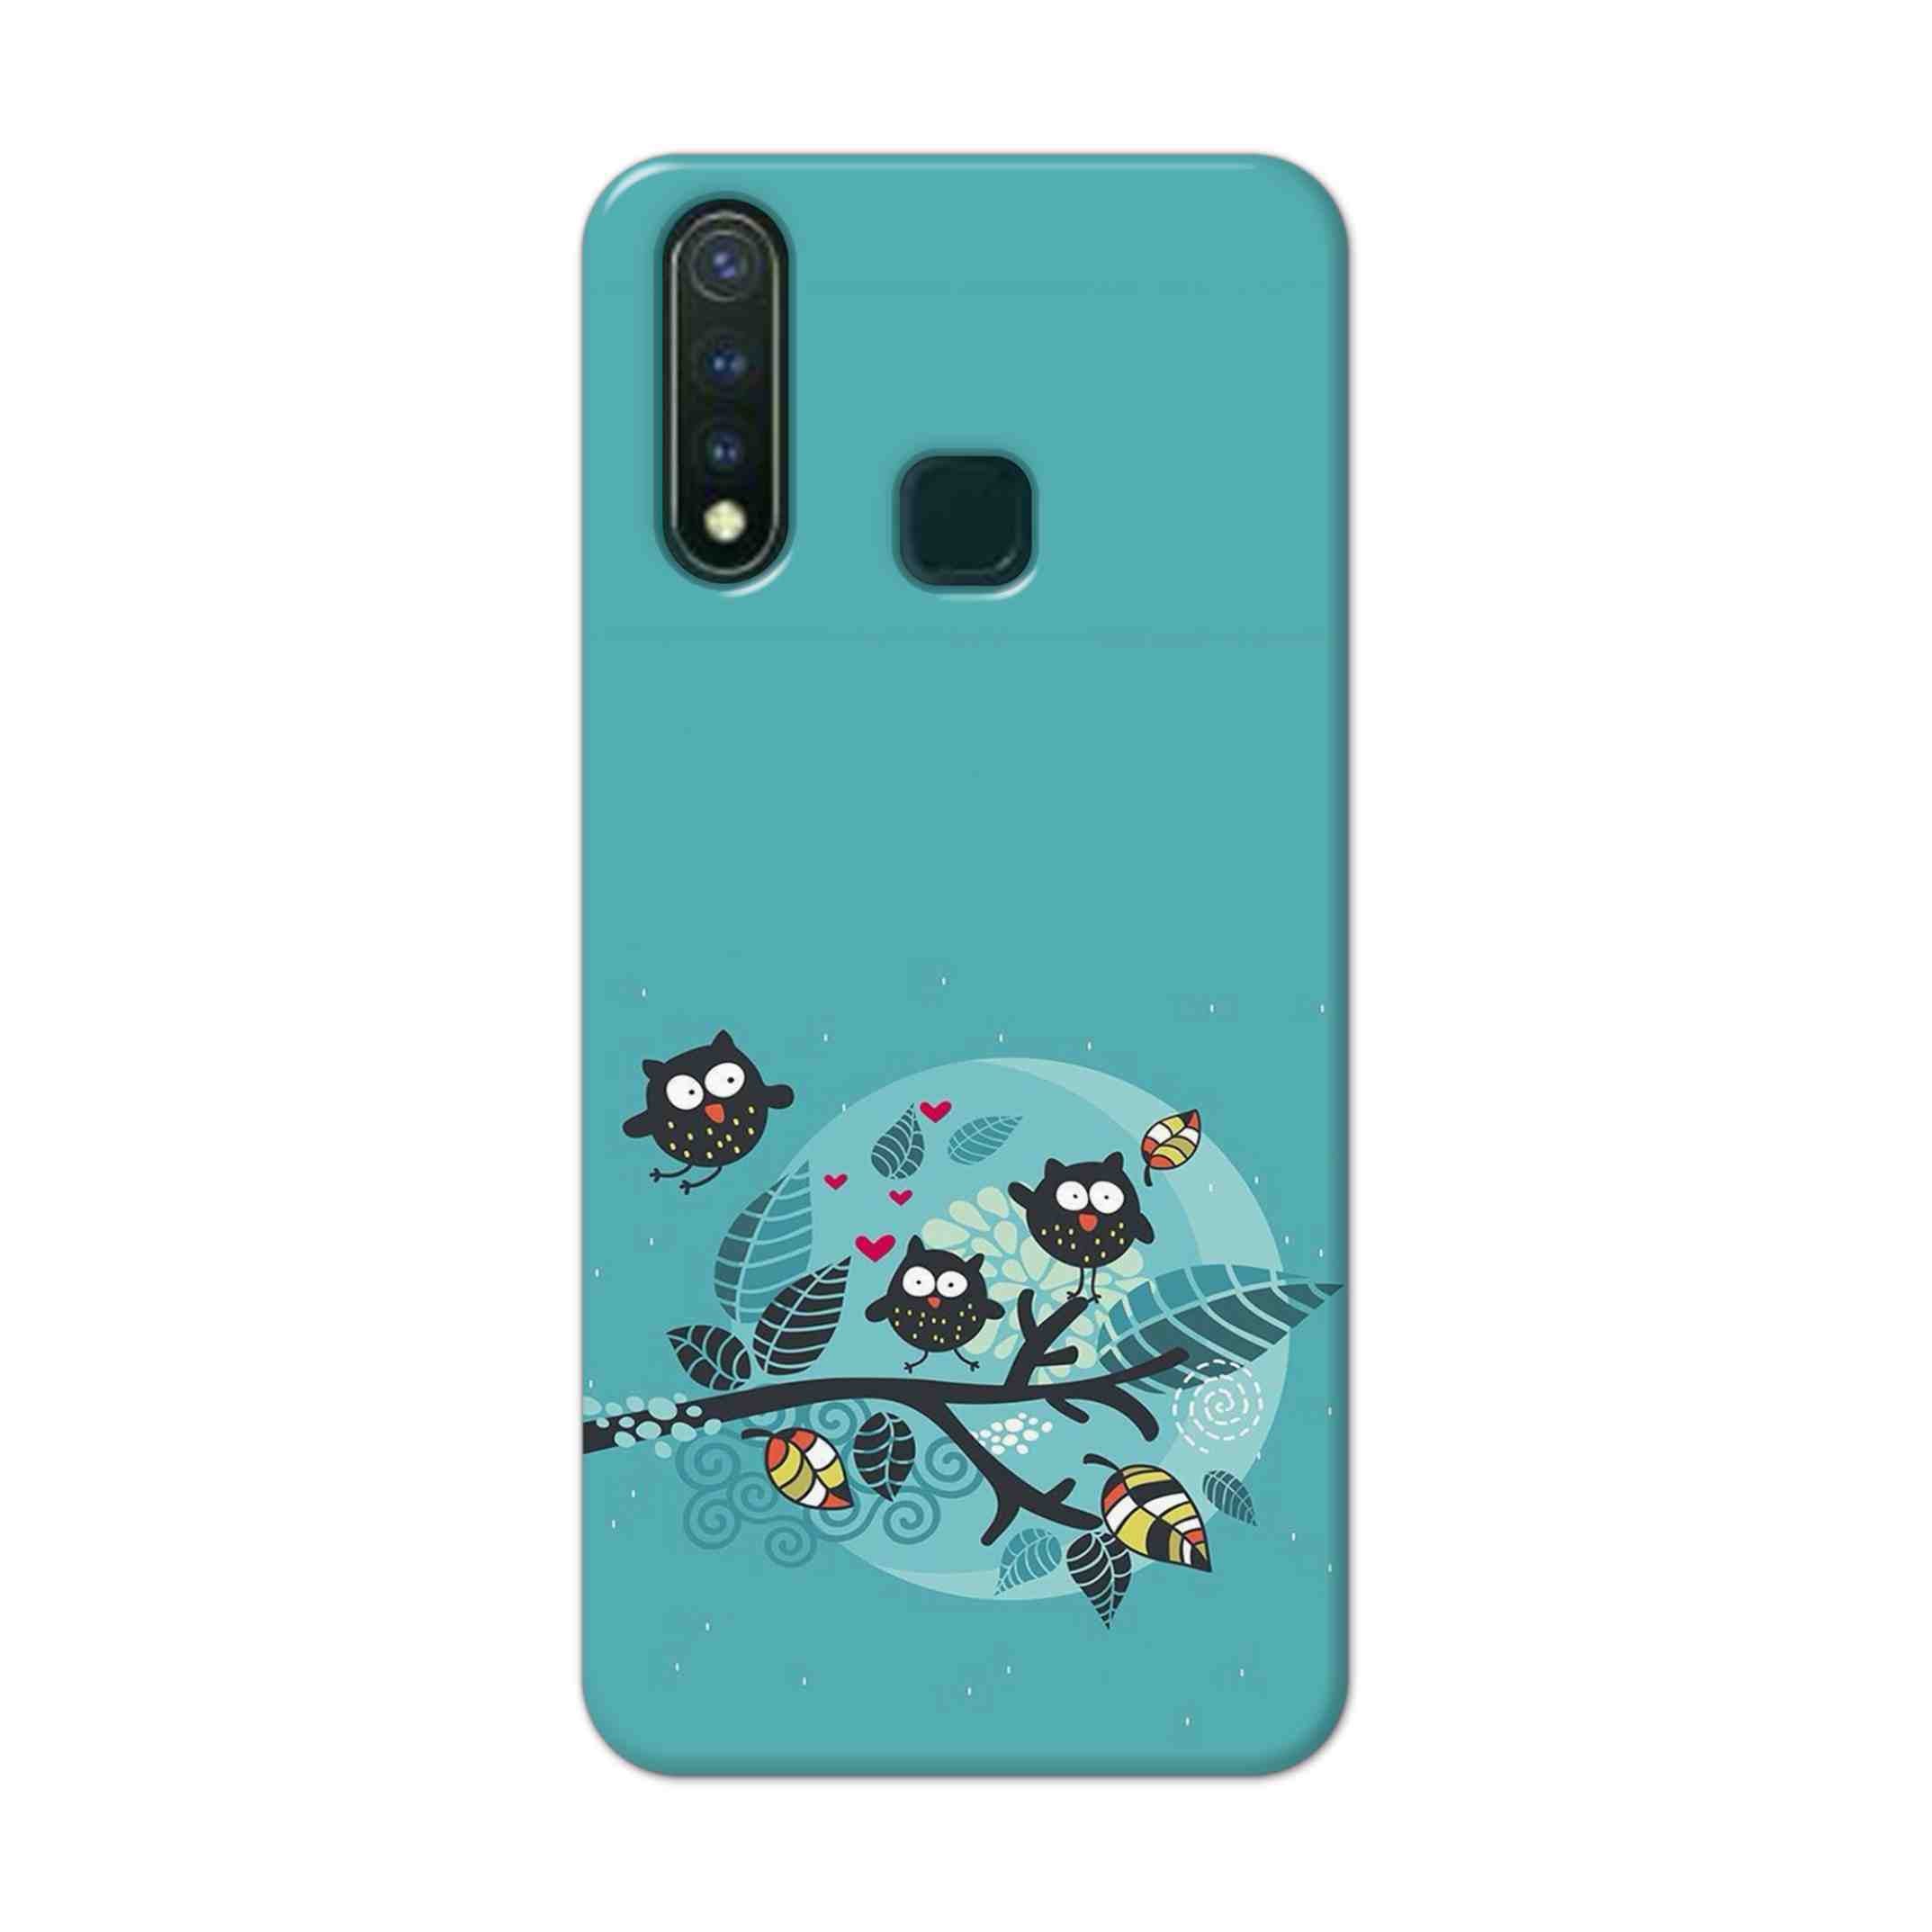 Buy Owl Hard Back Mobile Phone Case Cover For Vivo U20 Online